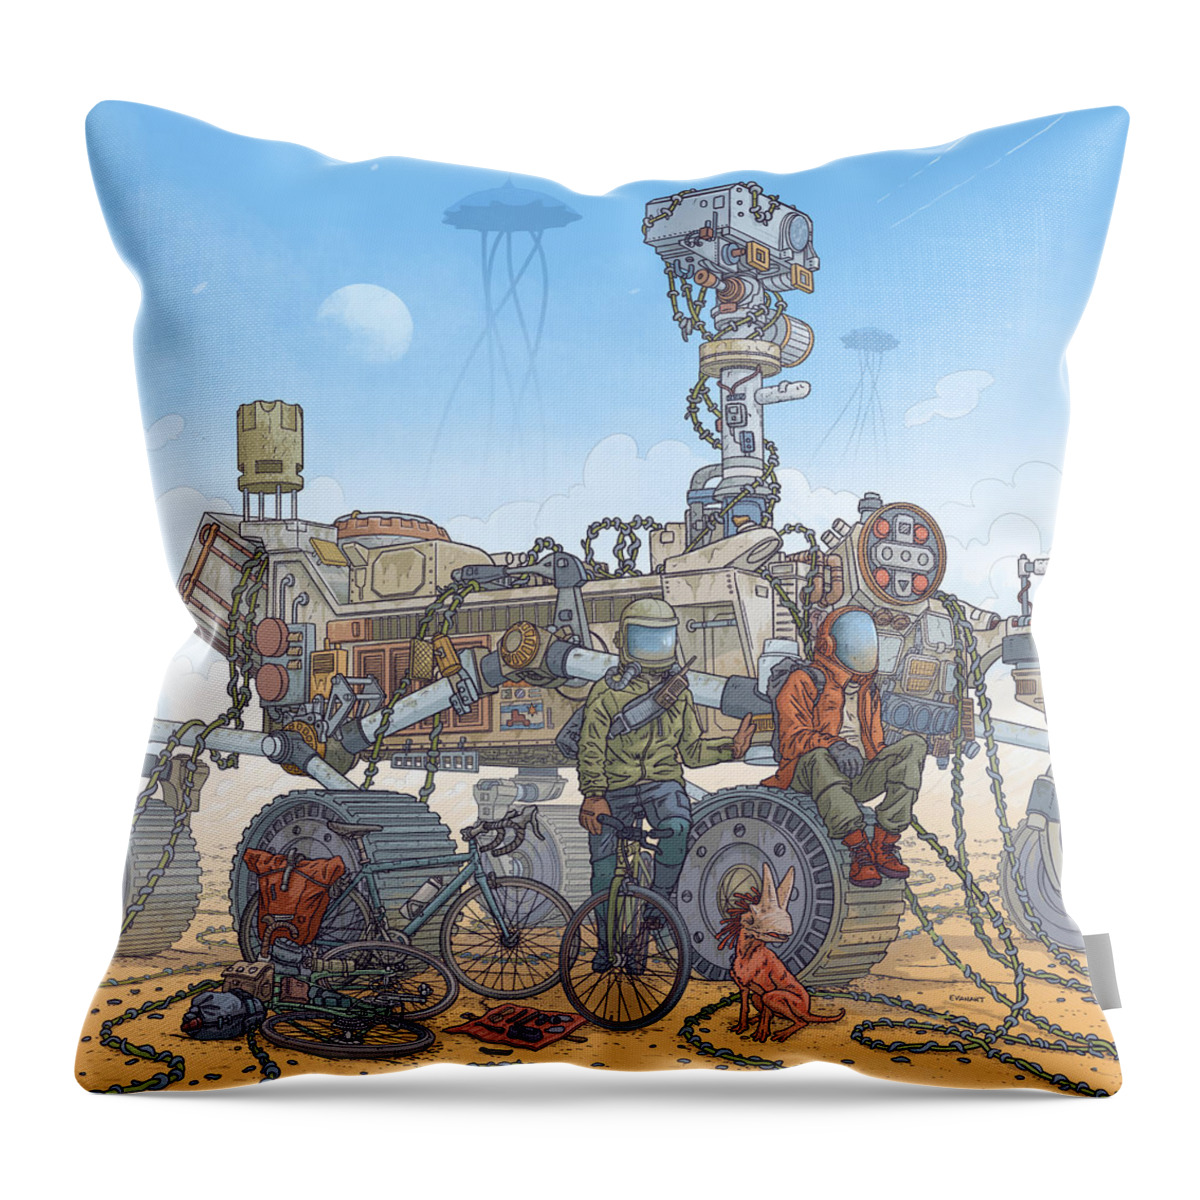  Throw Pillow featuring the digital art Rover Ruins Ride - w/ Helmets by EvanArt - Evan Miller